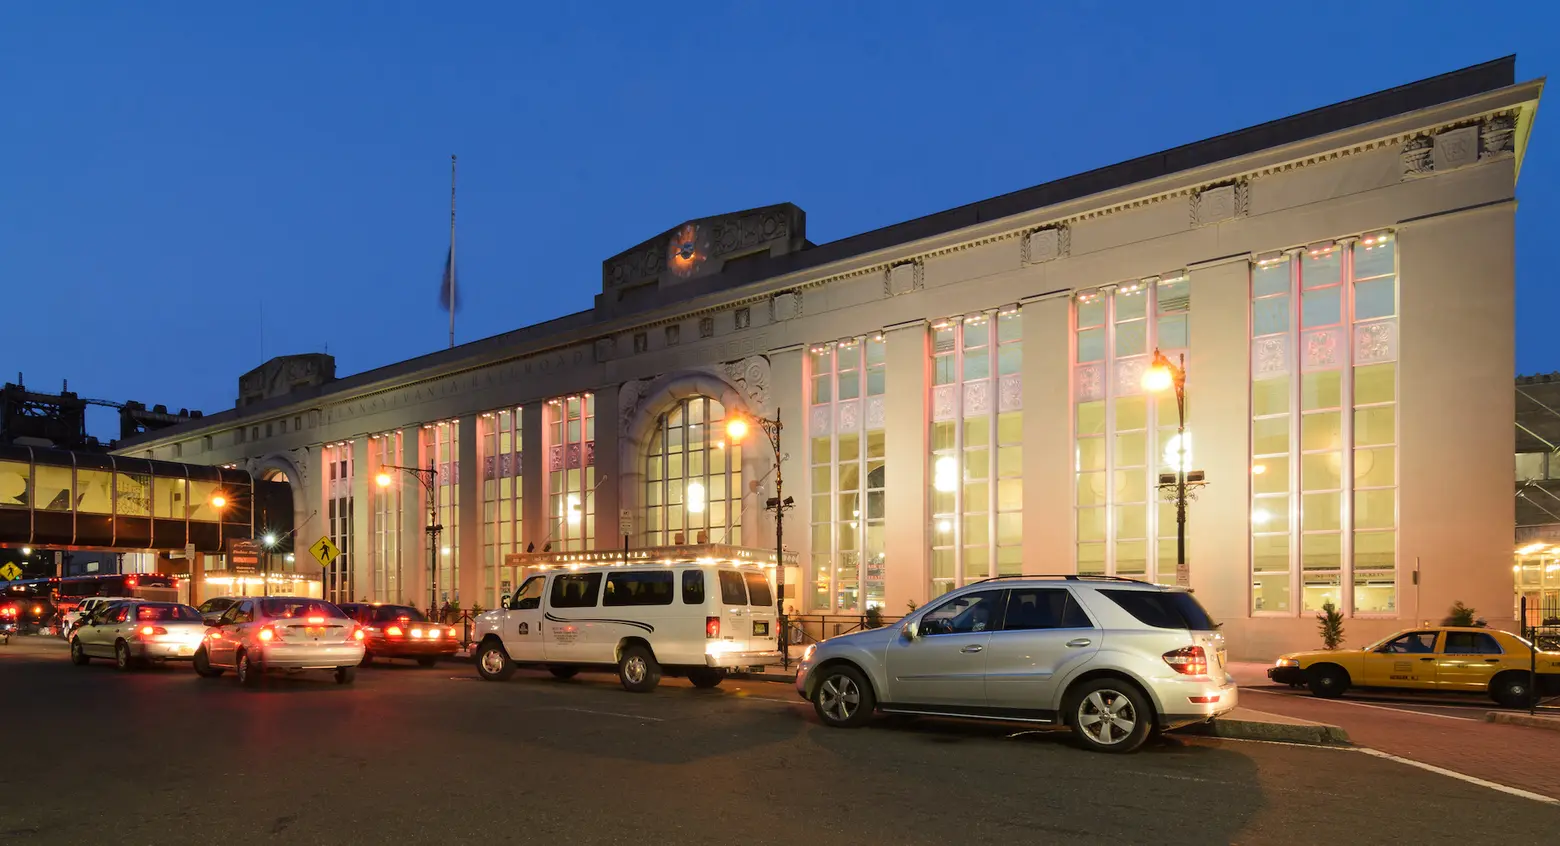 NJ Transit wants feedback on its Newark Penn Station revitalization project